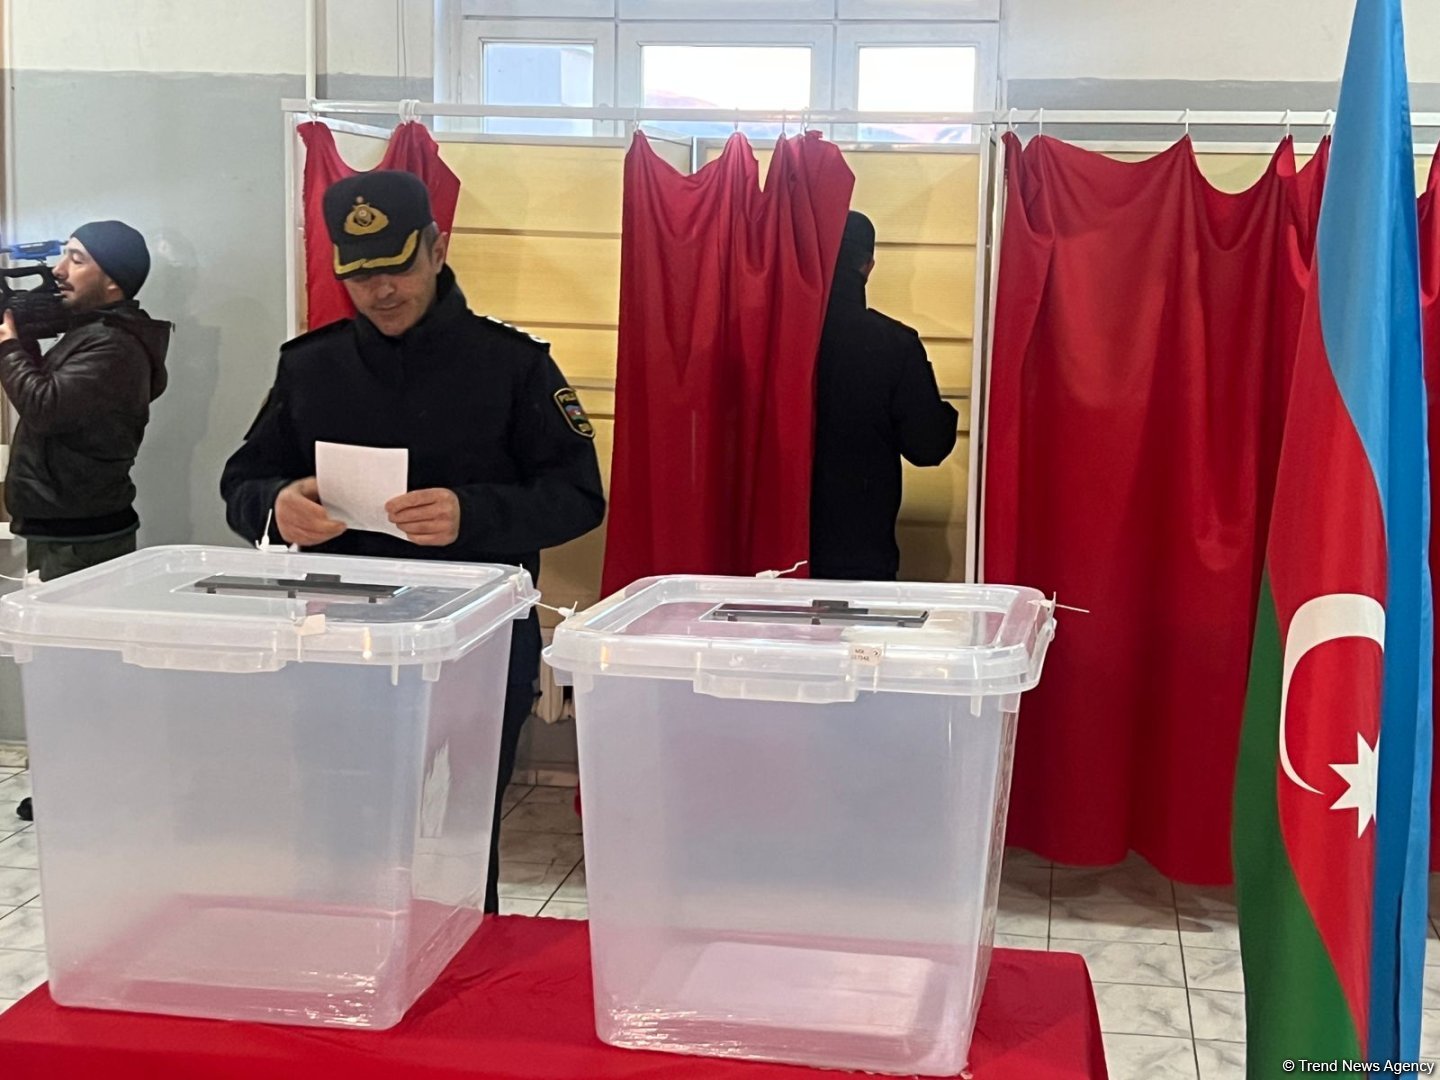 Presidential election voting underway in Azerbaijan's Khankendi (PHOTO/VIDEO)